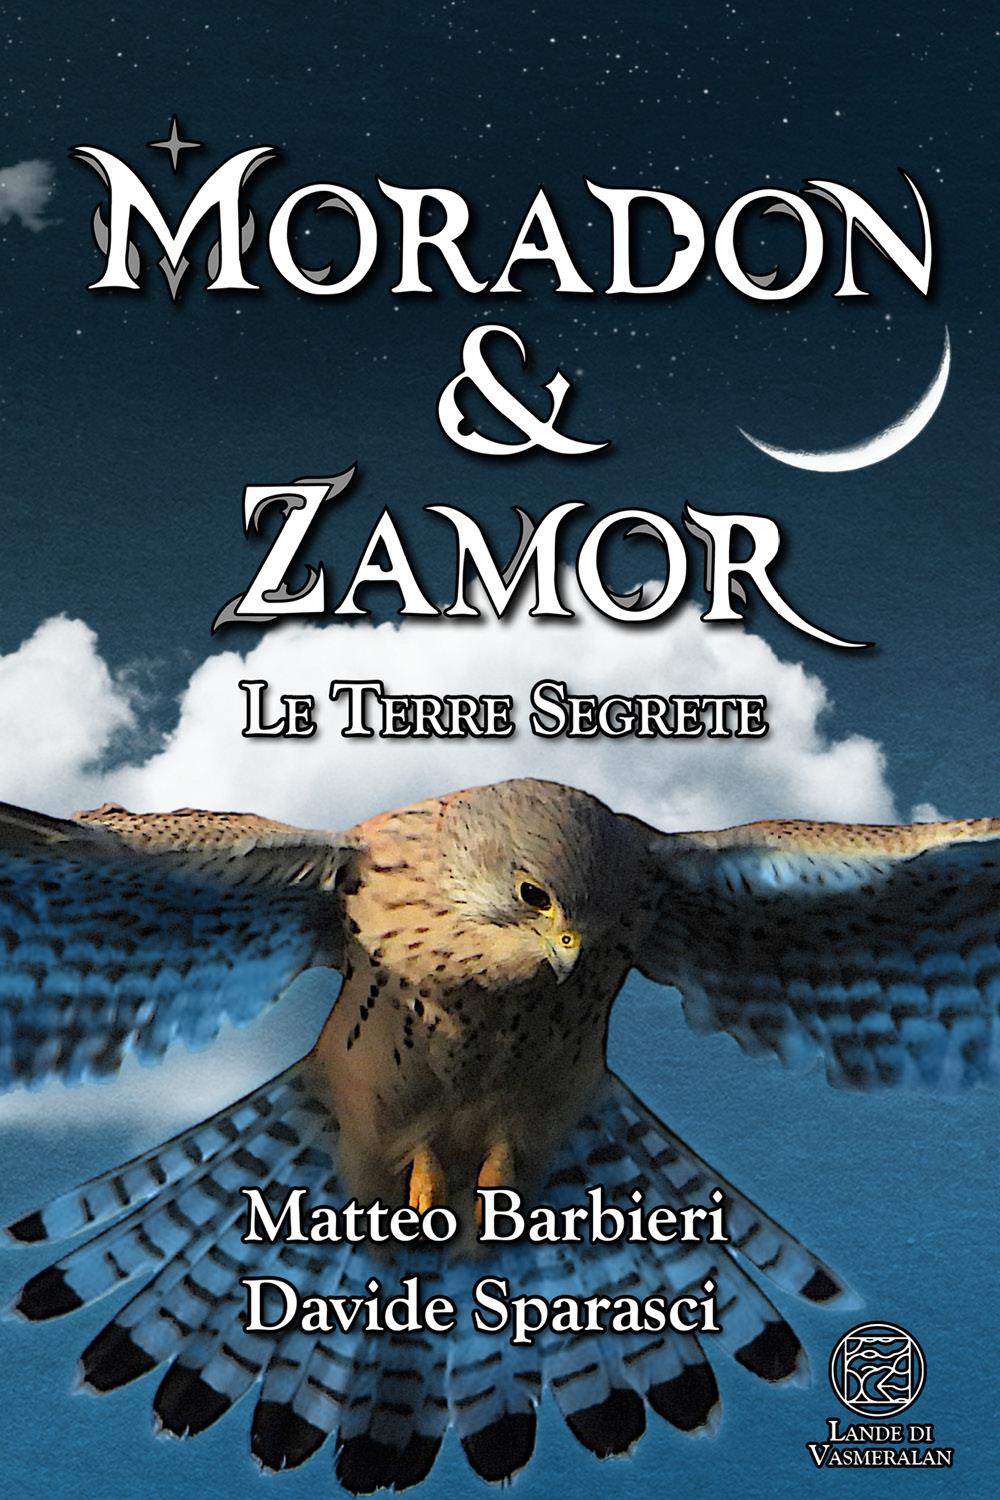 Moradon & Zamor. Le Terre Segrete